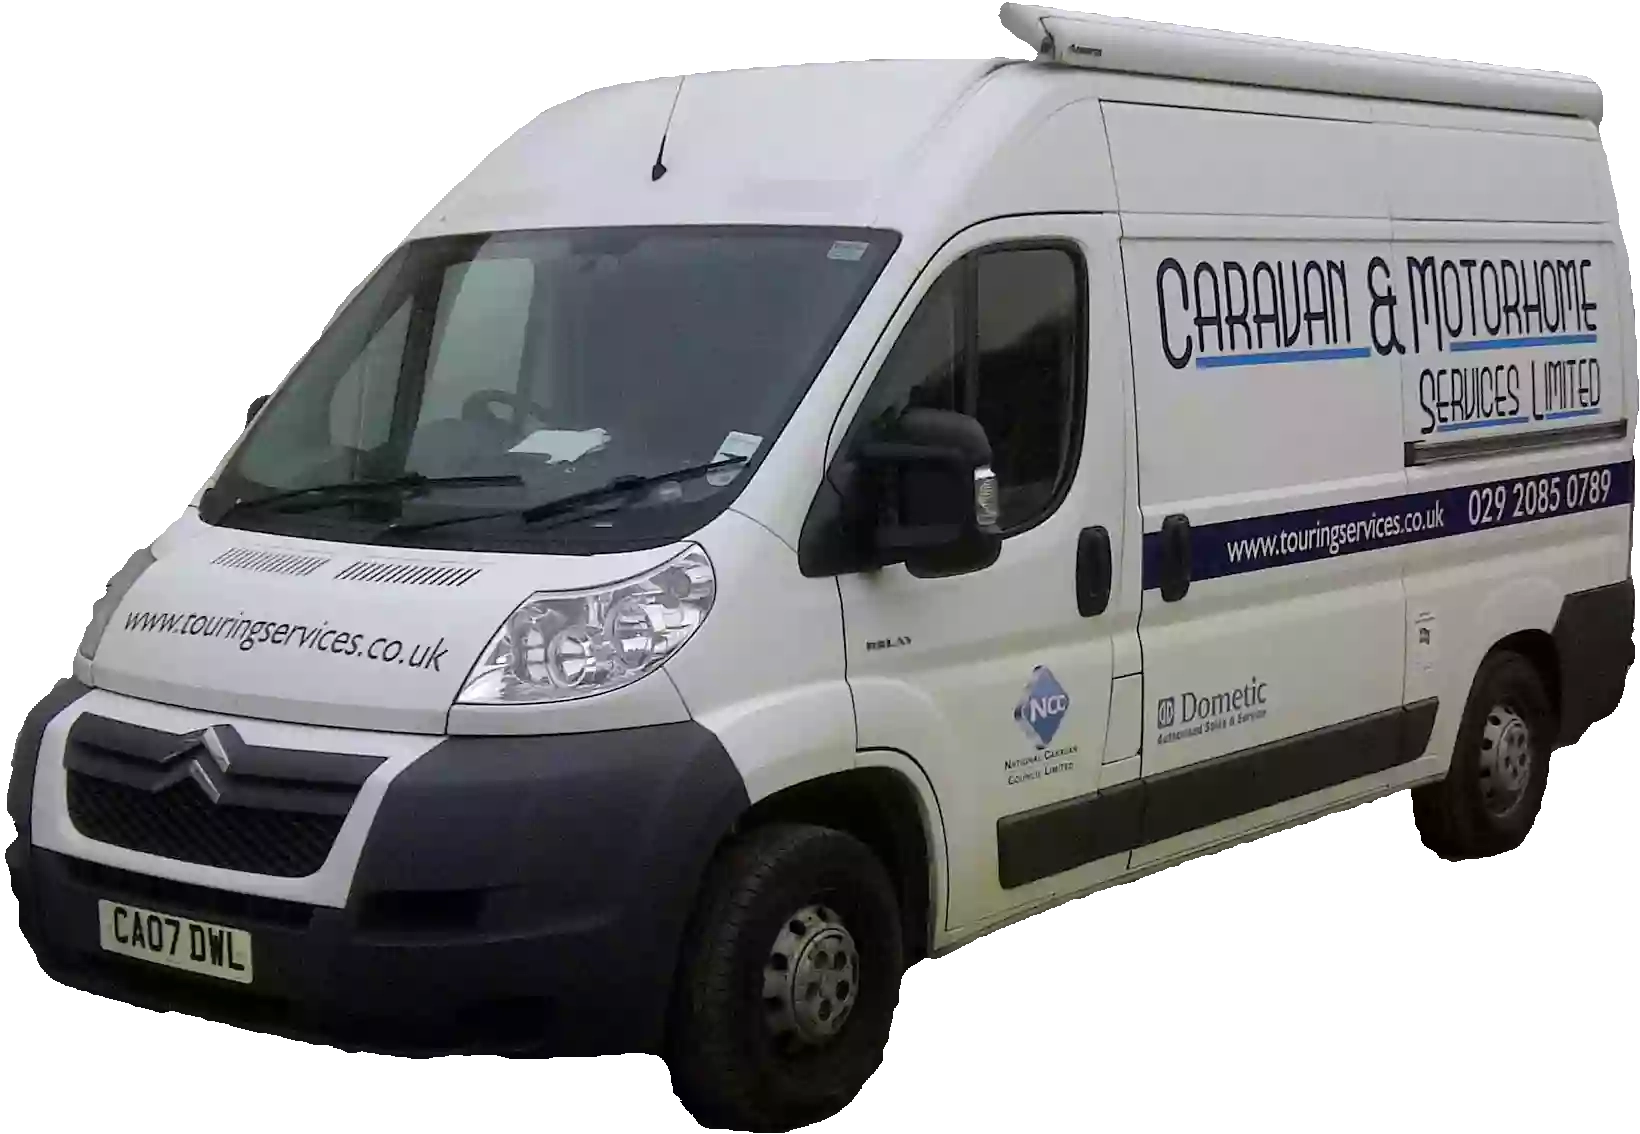 Caravan & Motorhome Services Ltd